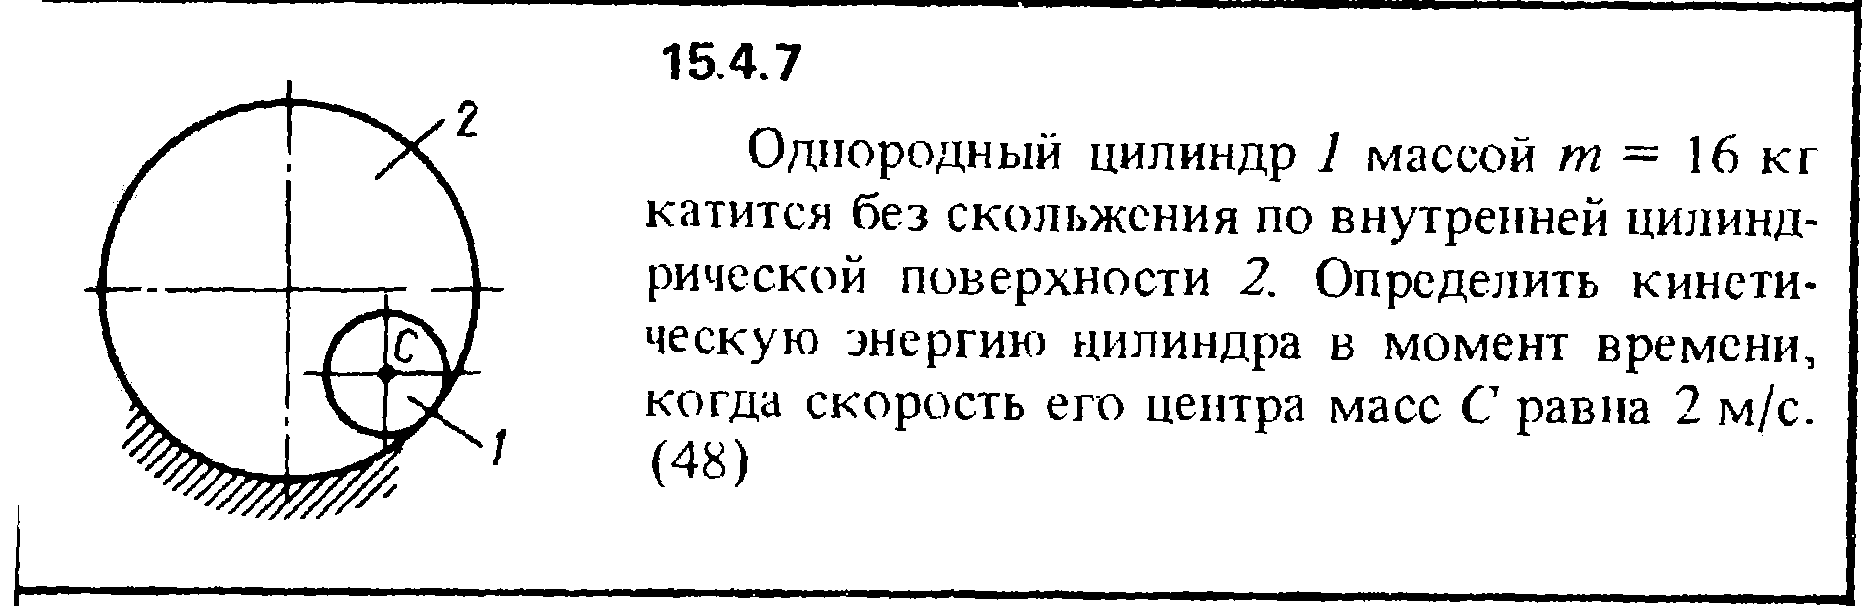 Решение задачи 15.4.7 из сборника Кепе О.Е. 1989 года